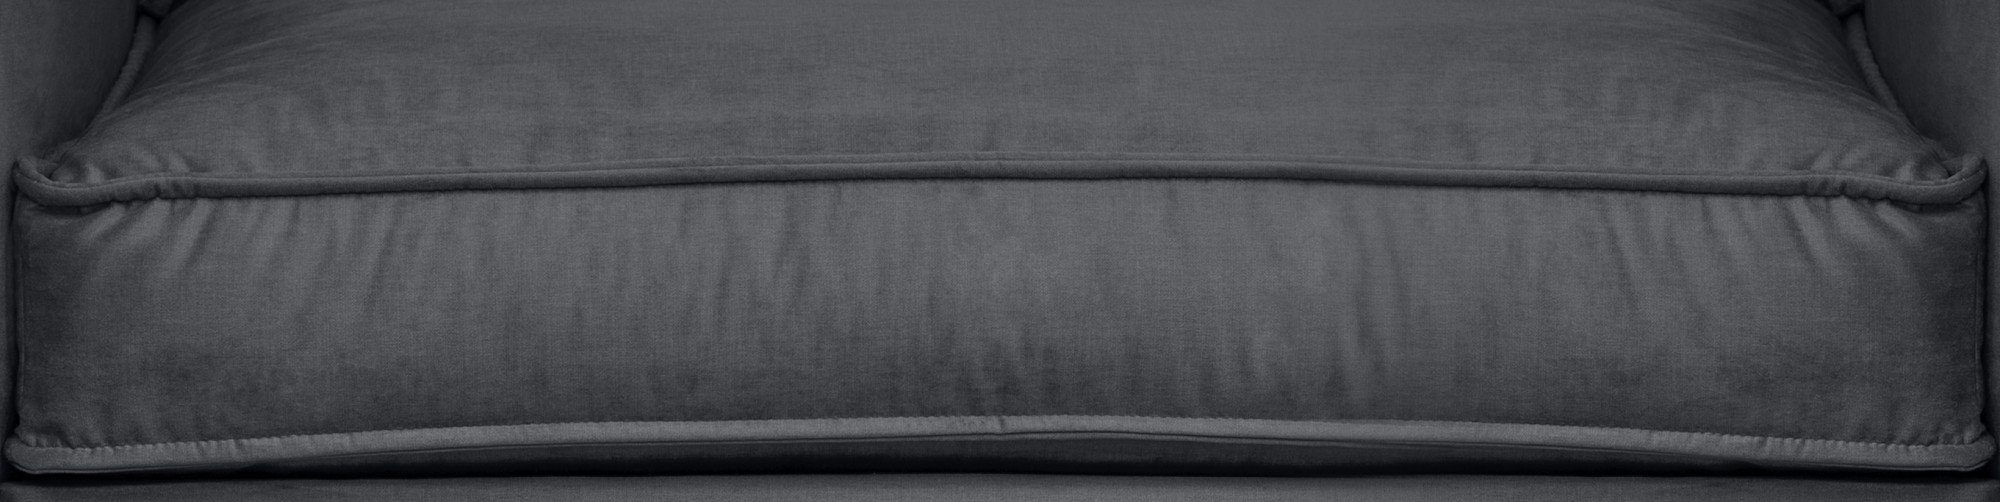 Ecksofa affaire middle gray Farben Home Sitzgelegenheiten, Tilques, verfügbar bequeme viele